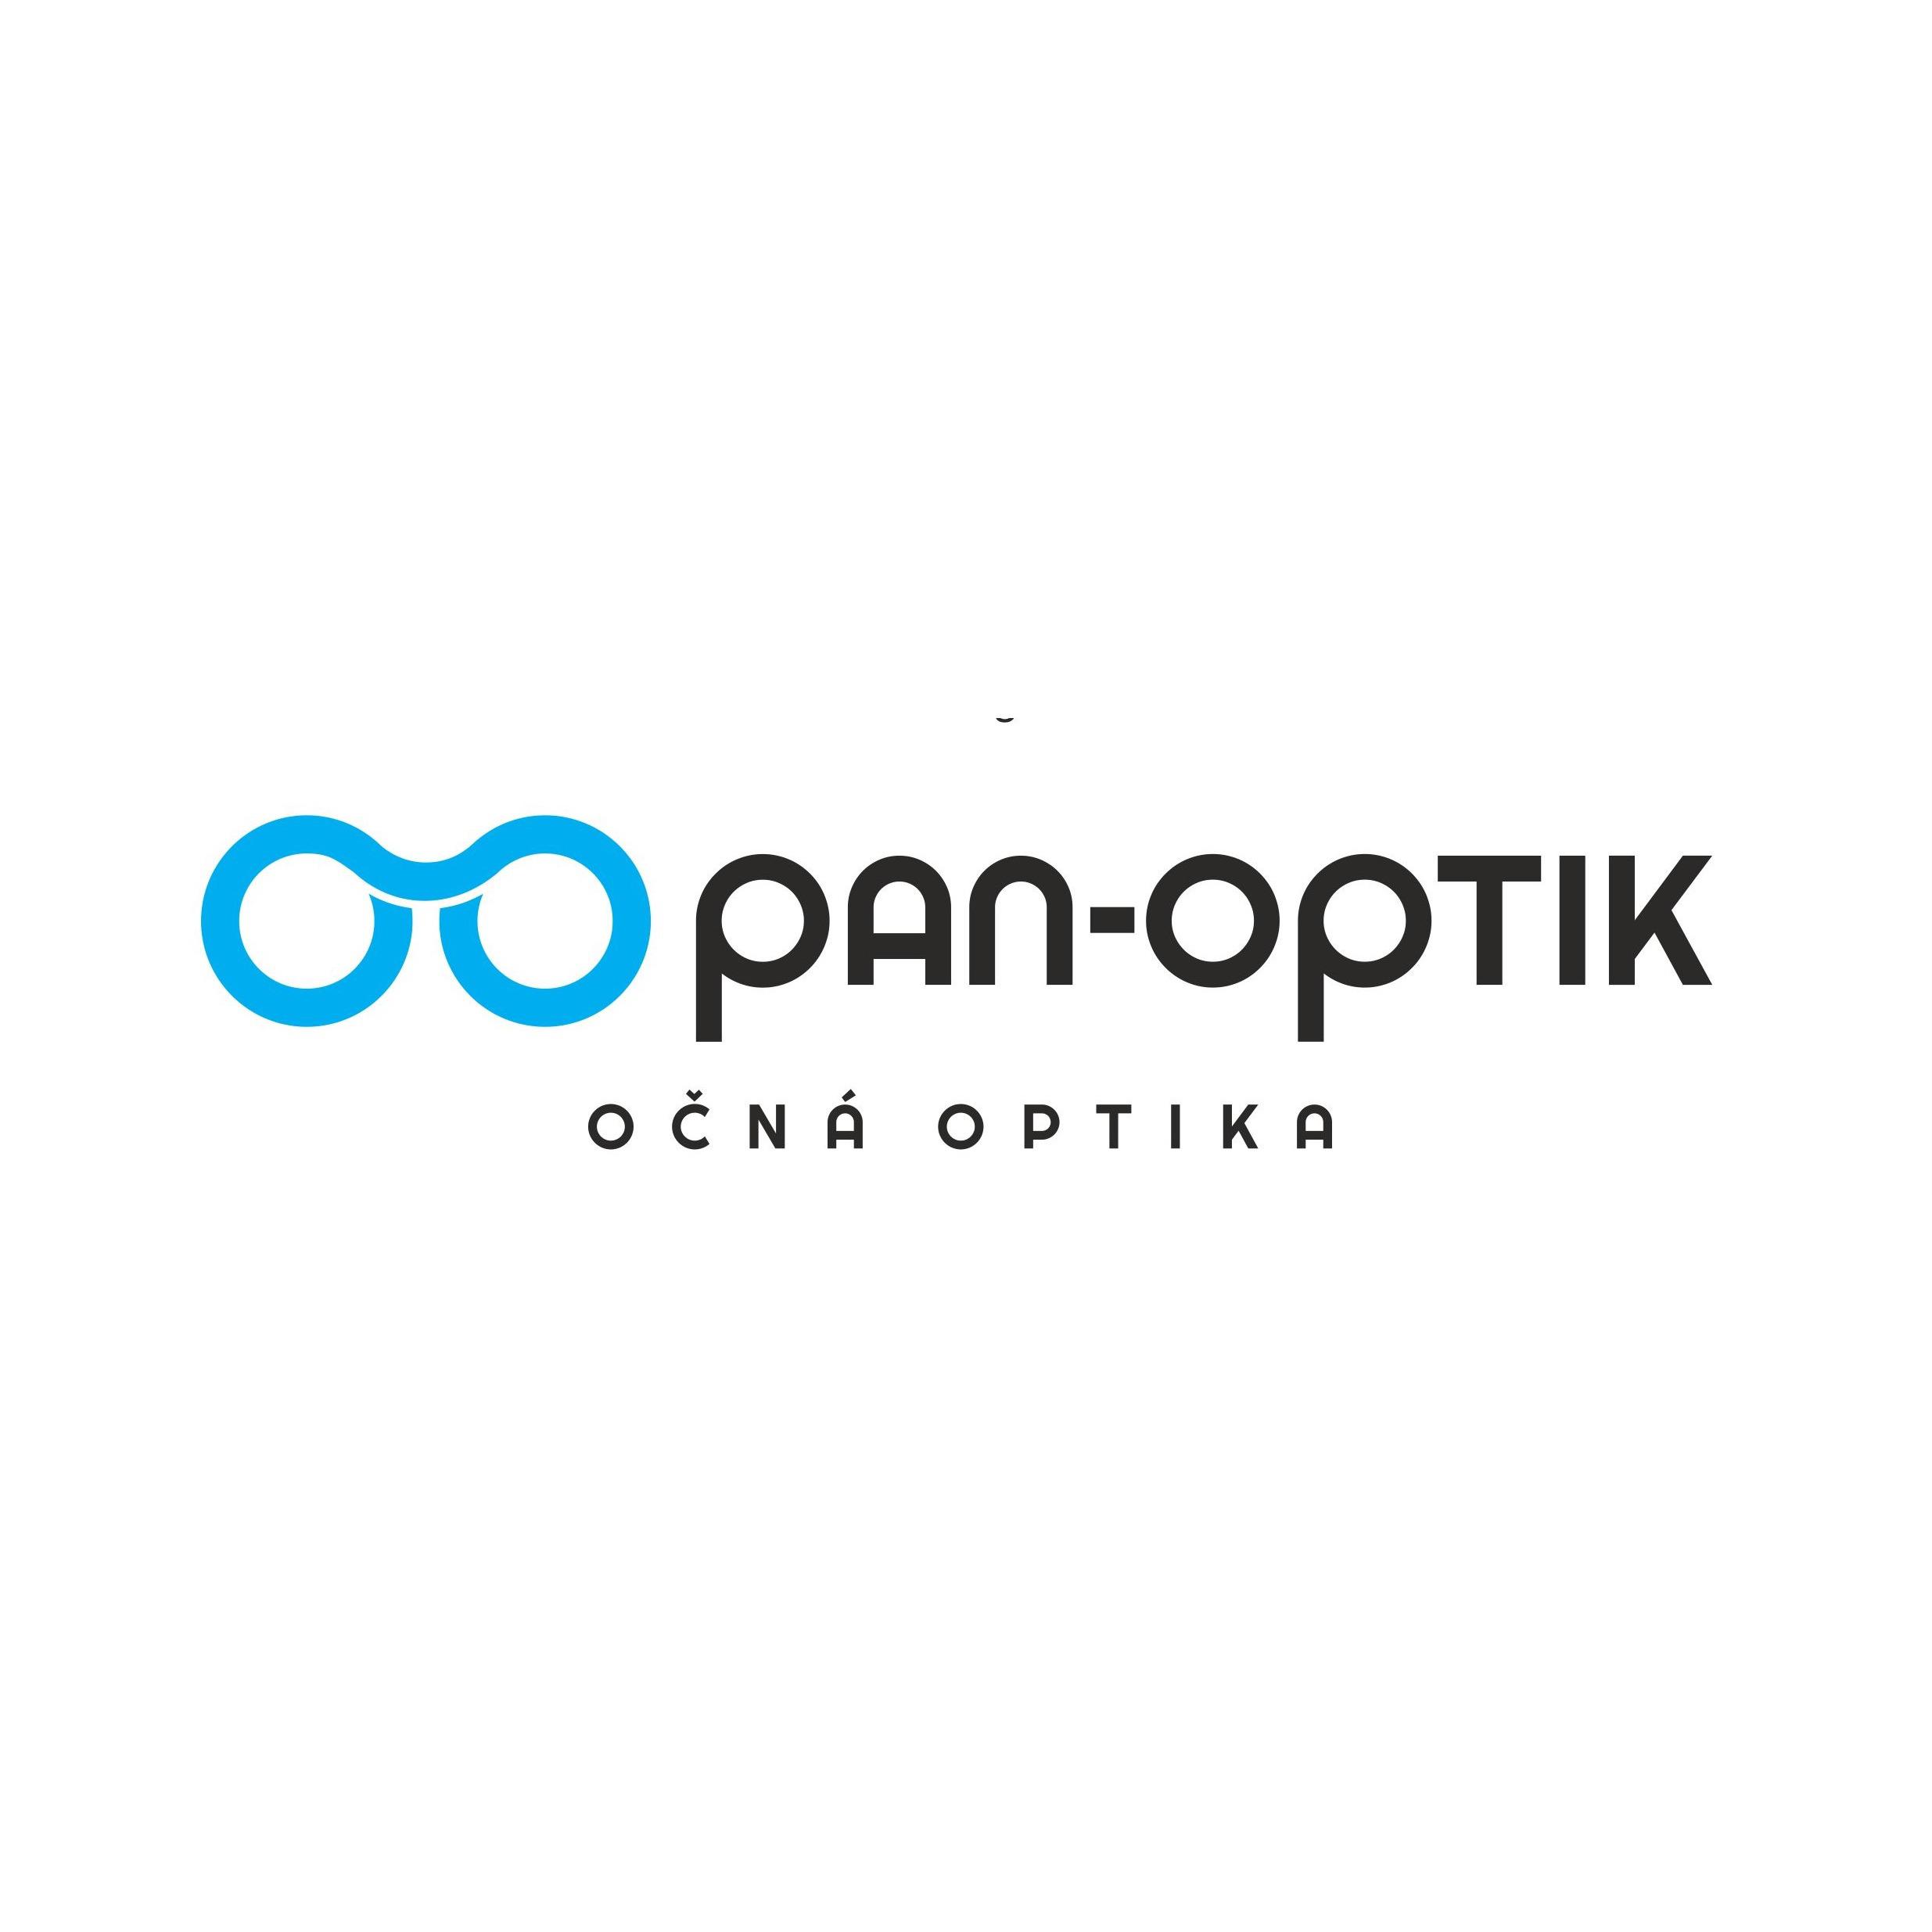 pan-optik